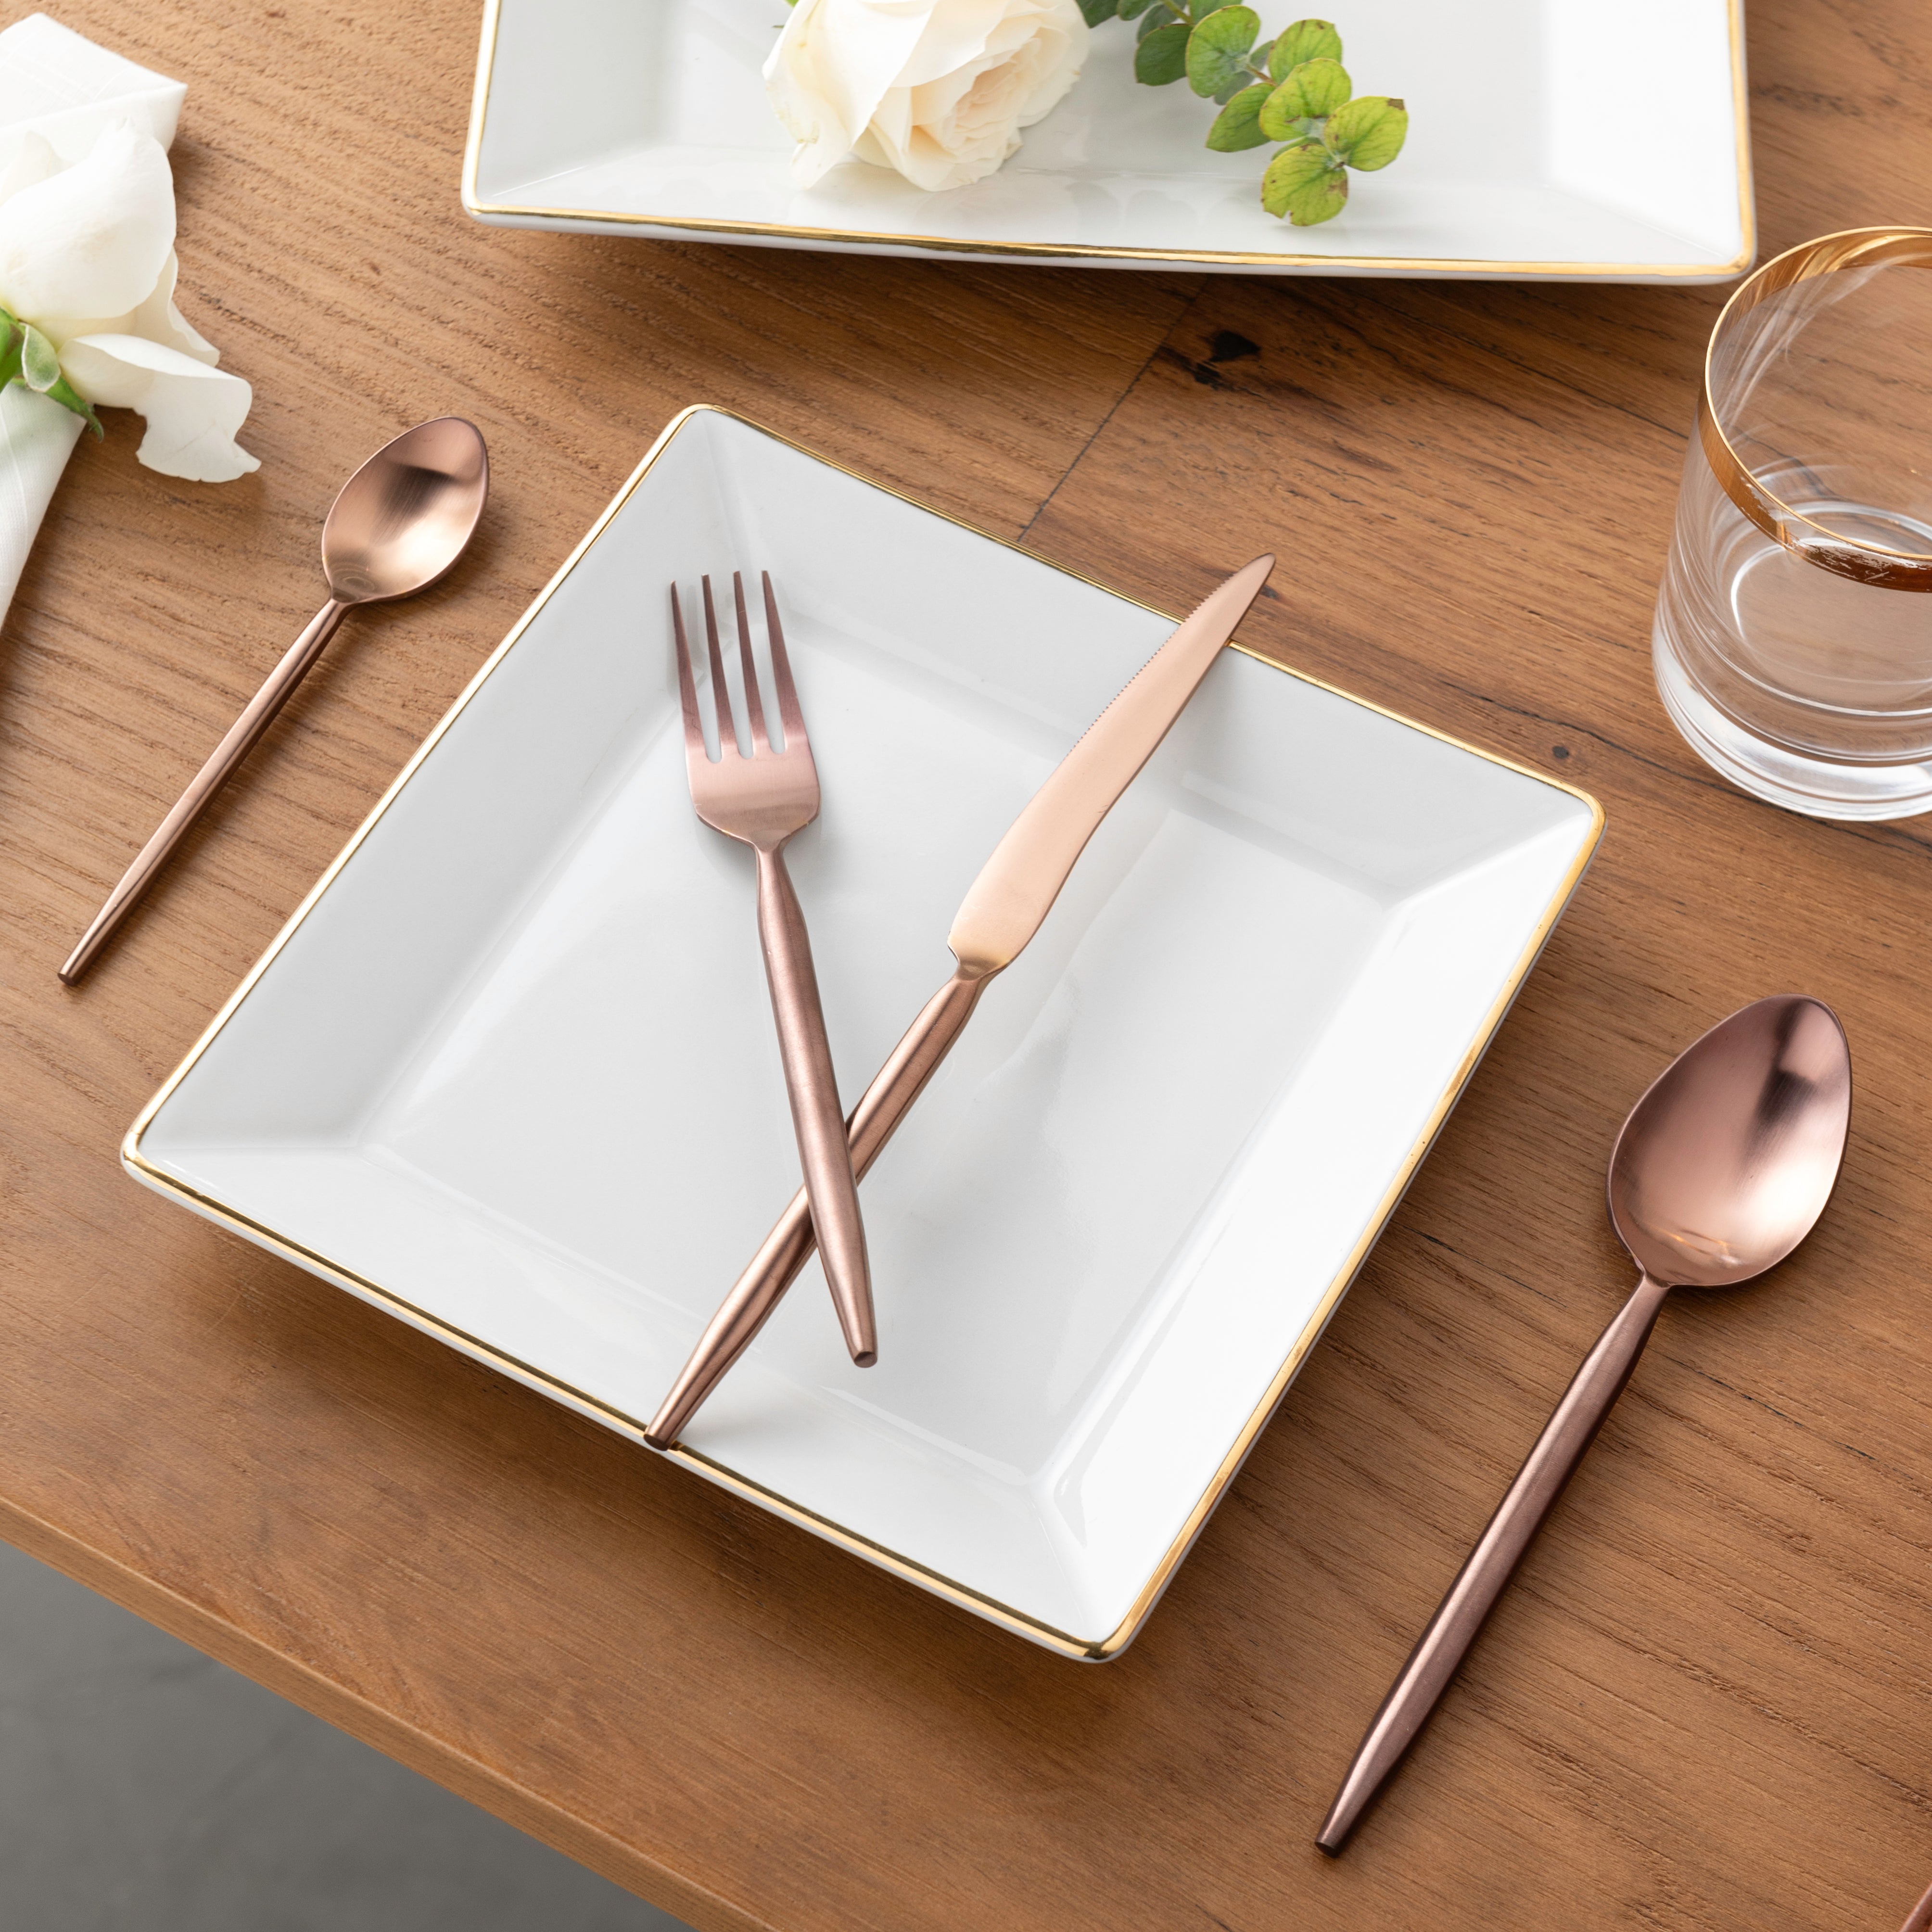 Seven Star Handmade Cutlery in Rosegold Matte Finish